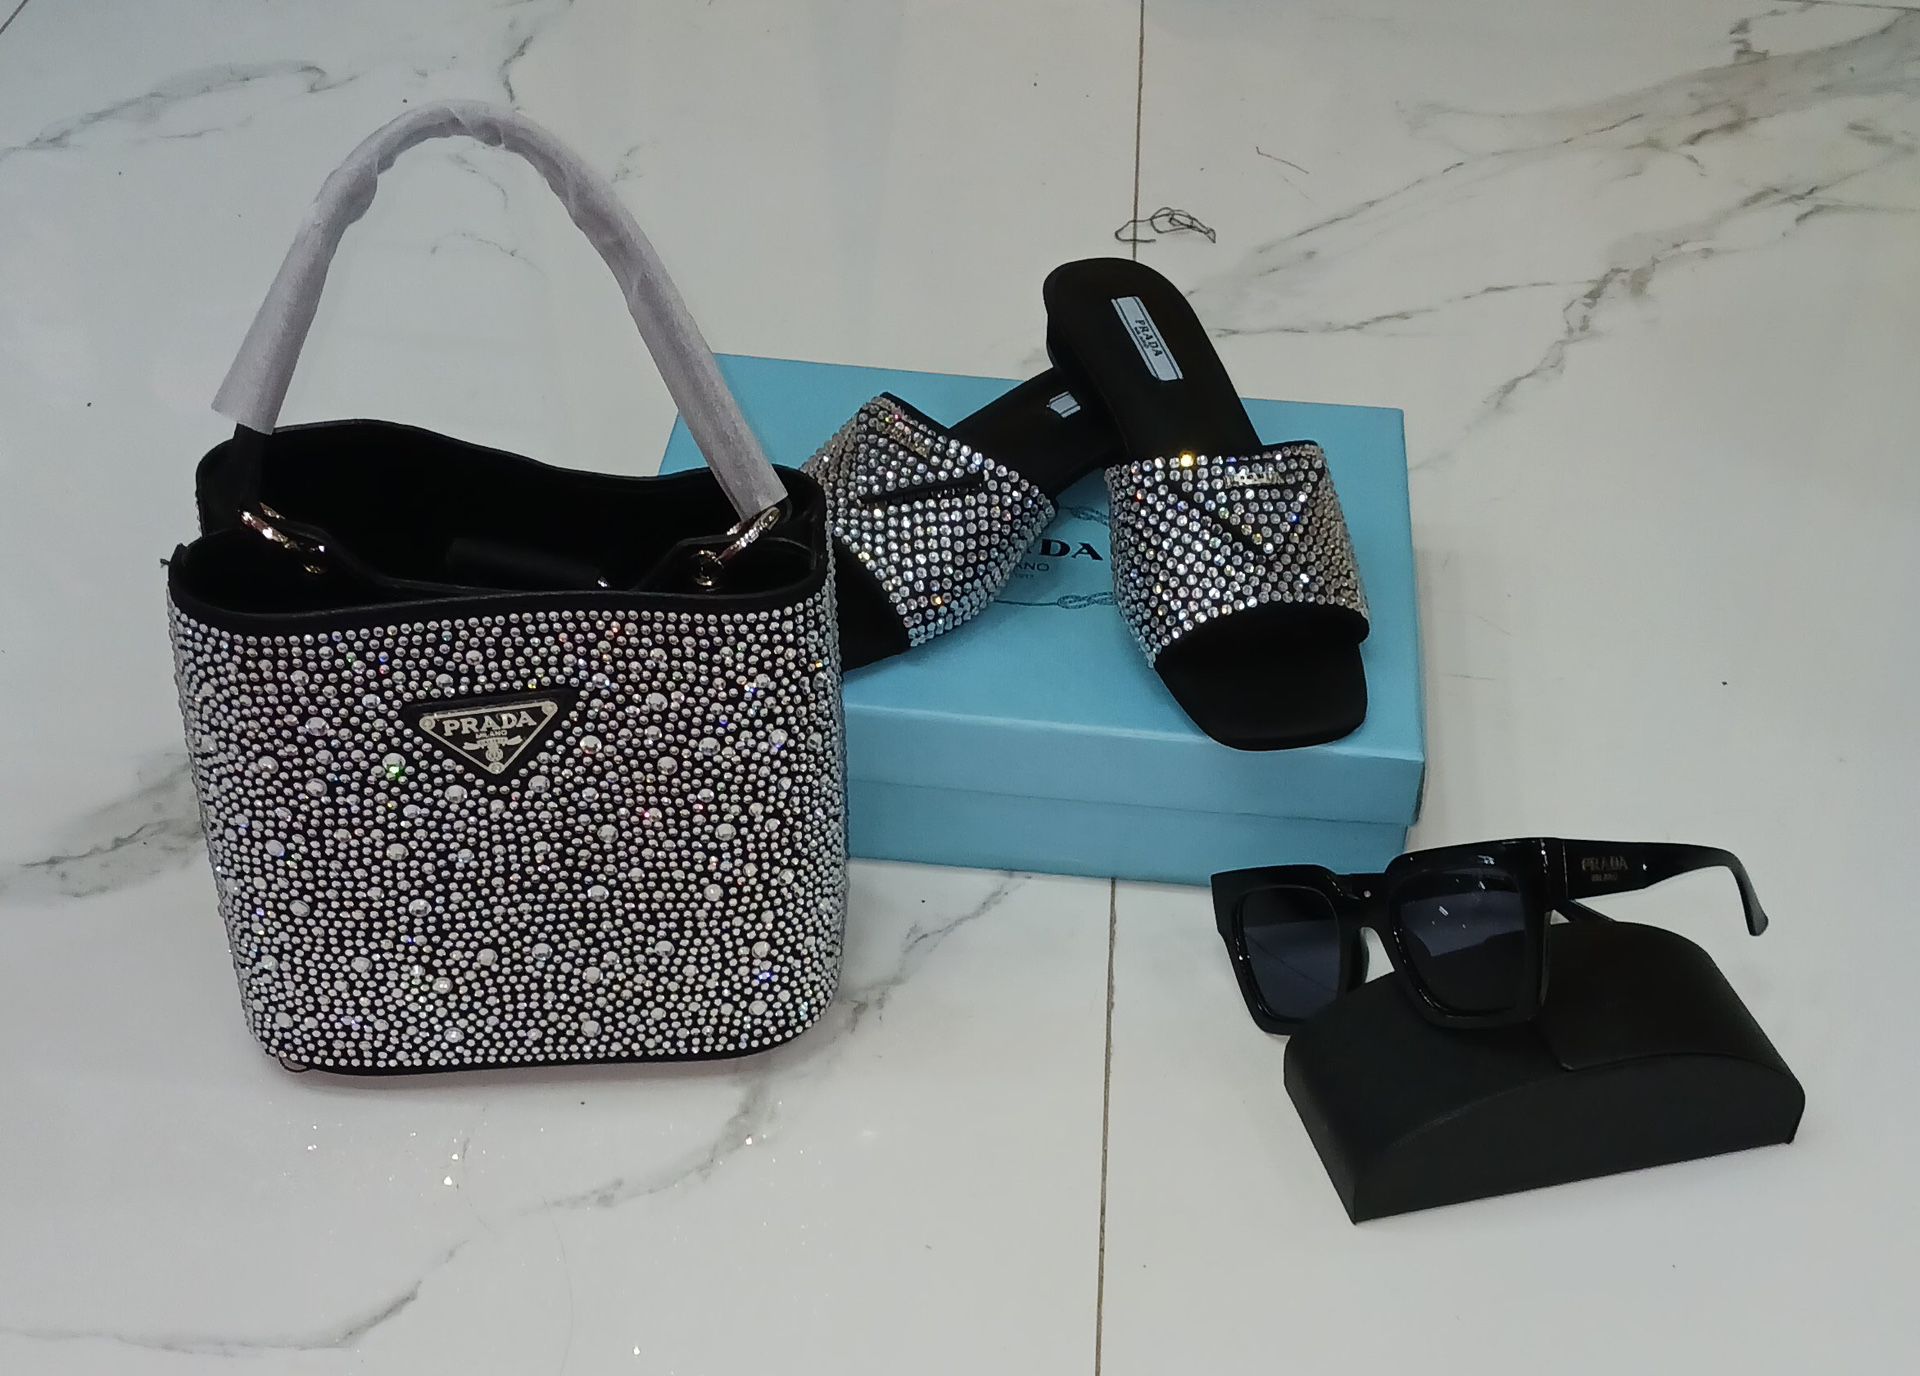 Handbag, Shoes, And Sunglasses